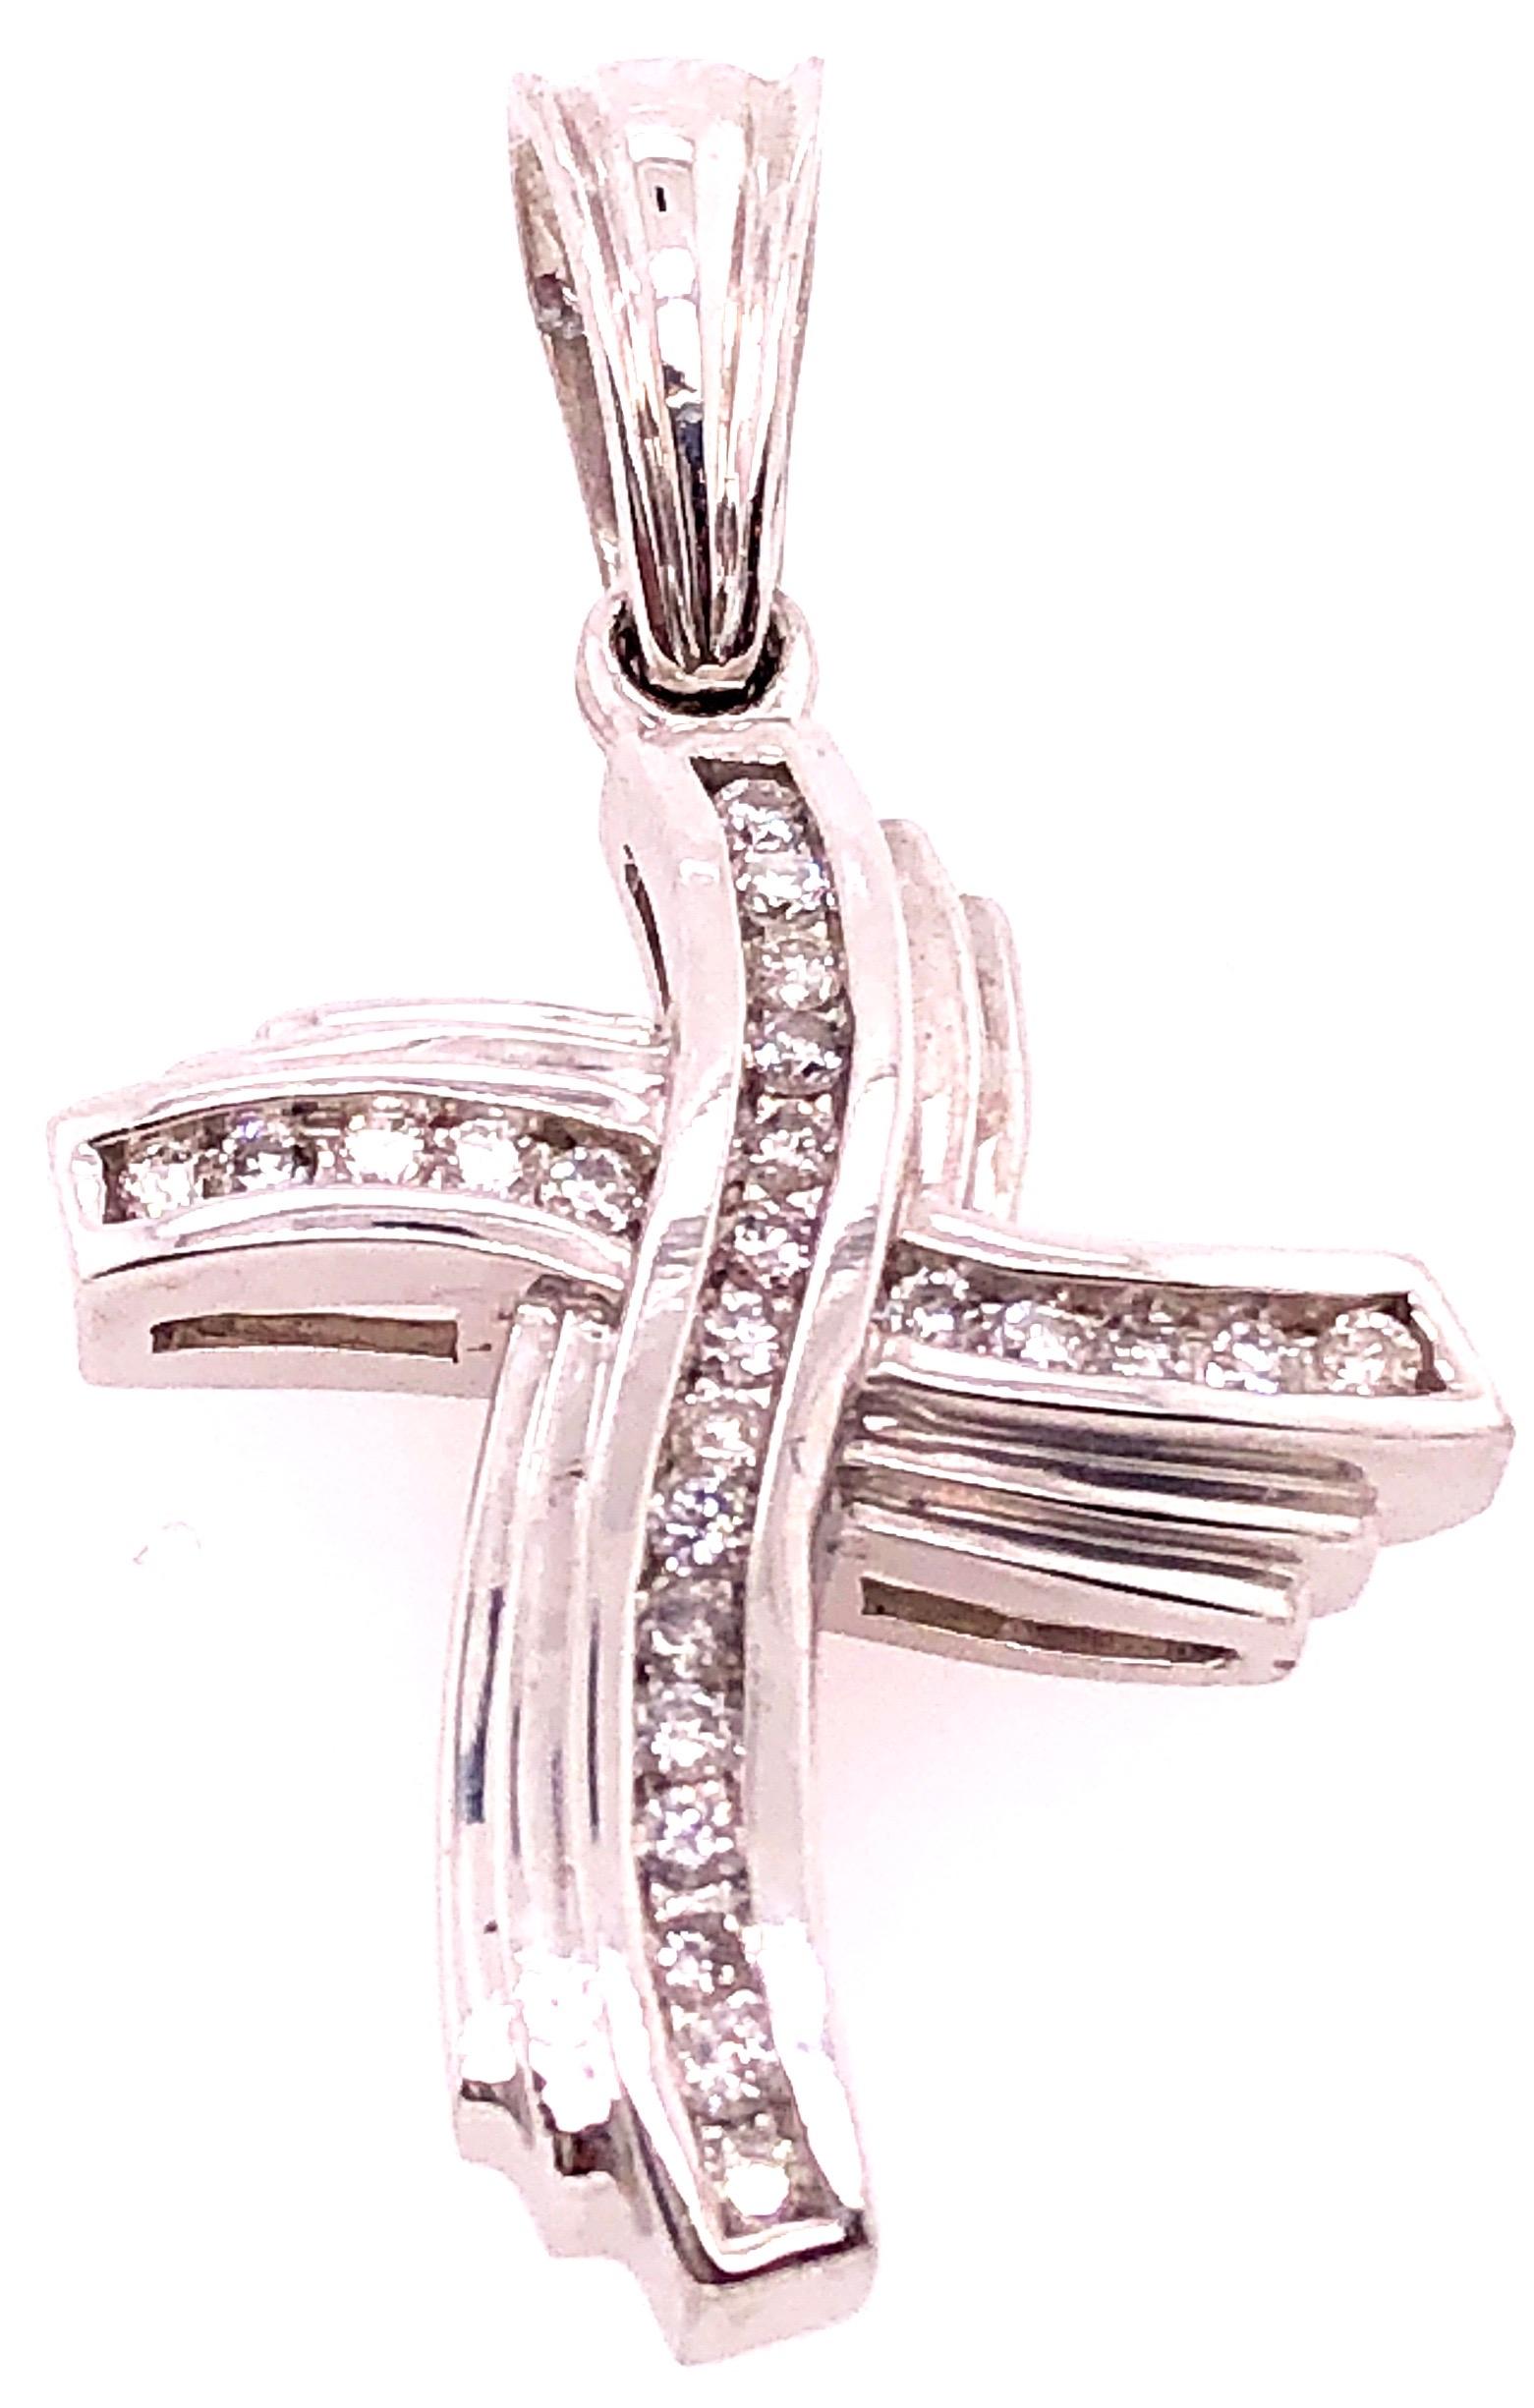 14 Karat White Gold And Diamond Religious Charm / Crucifix Pendant
0.50 total diamond weight.
4.75 grams
35.52 mm height